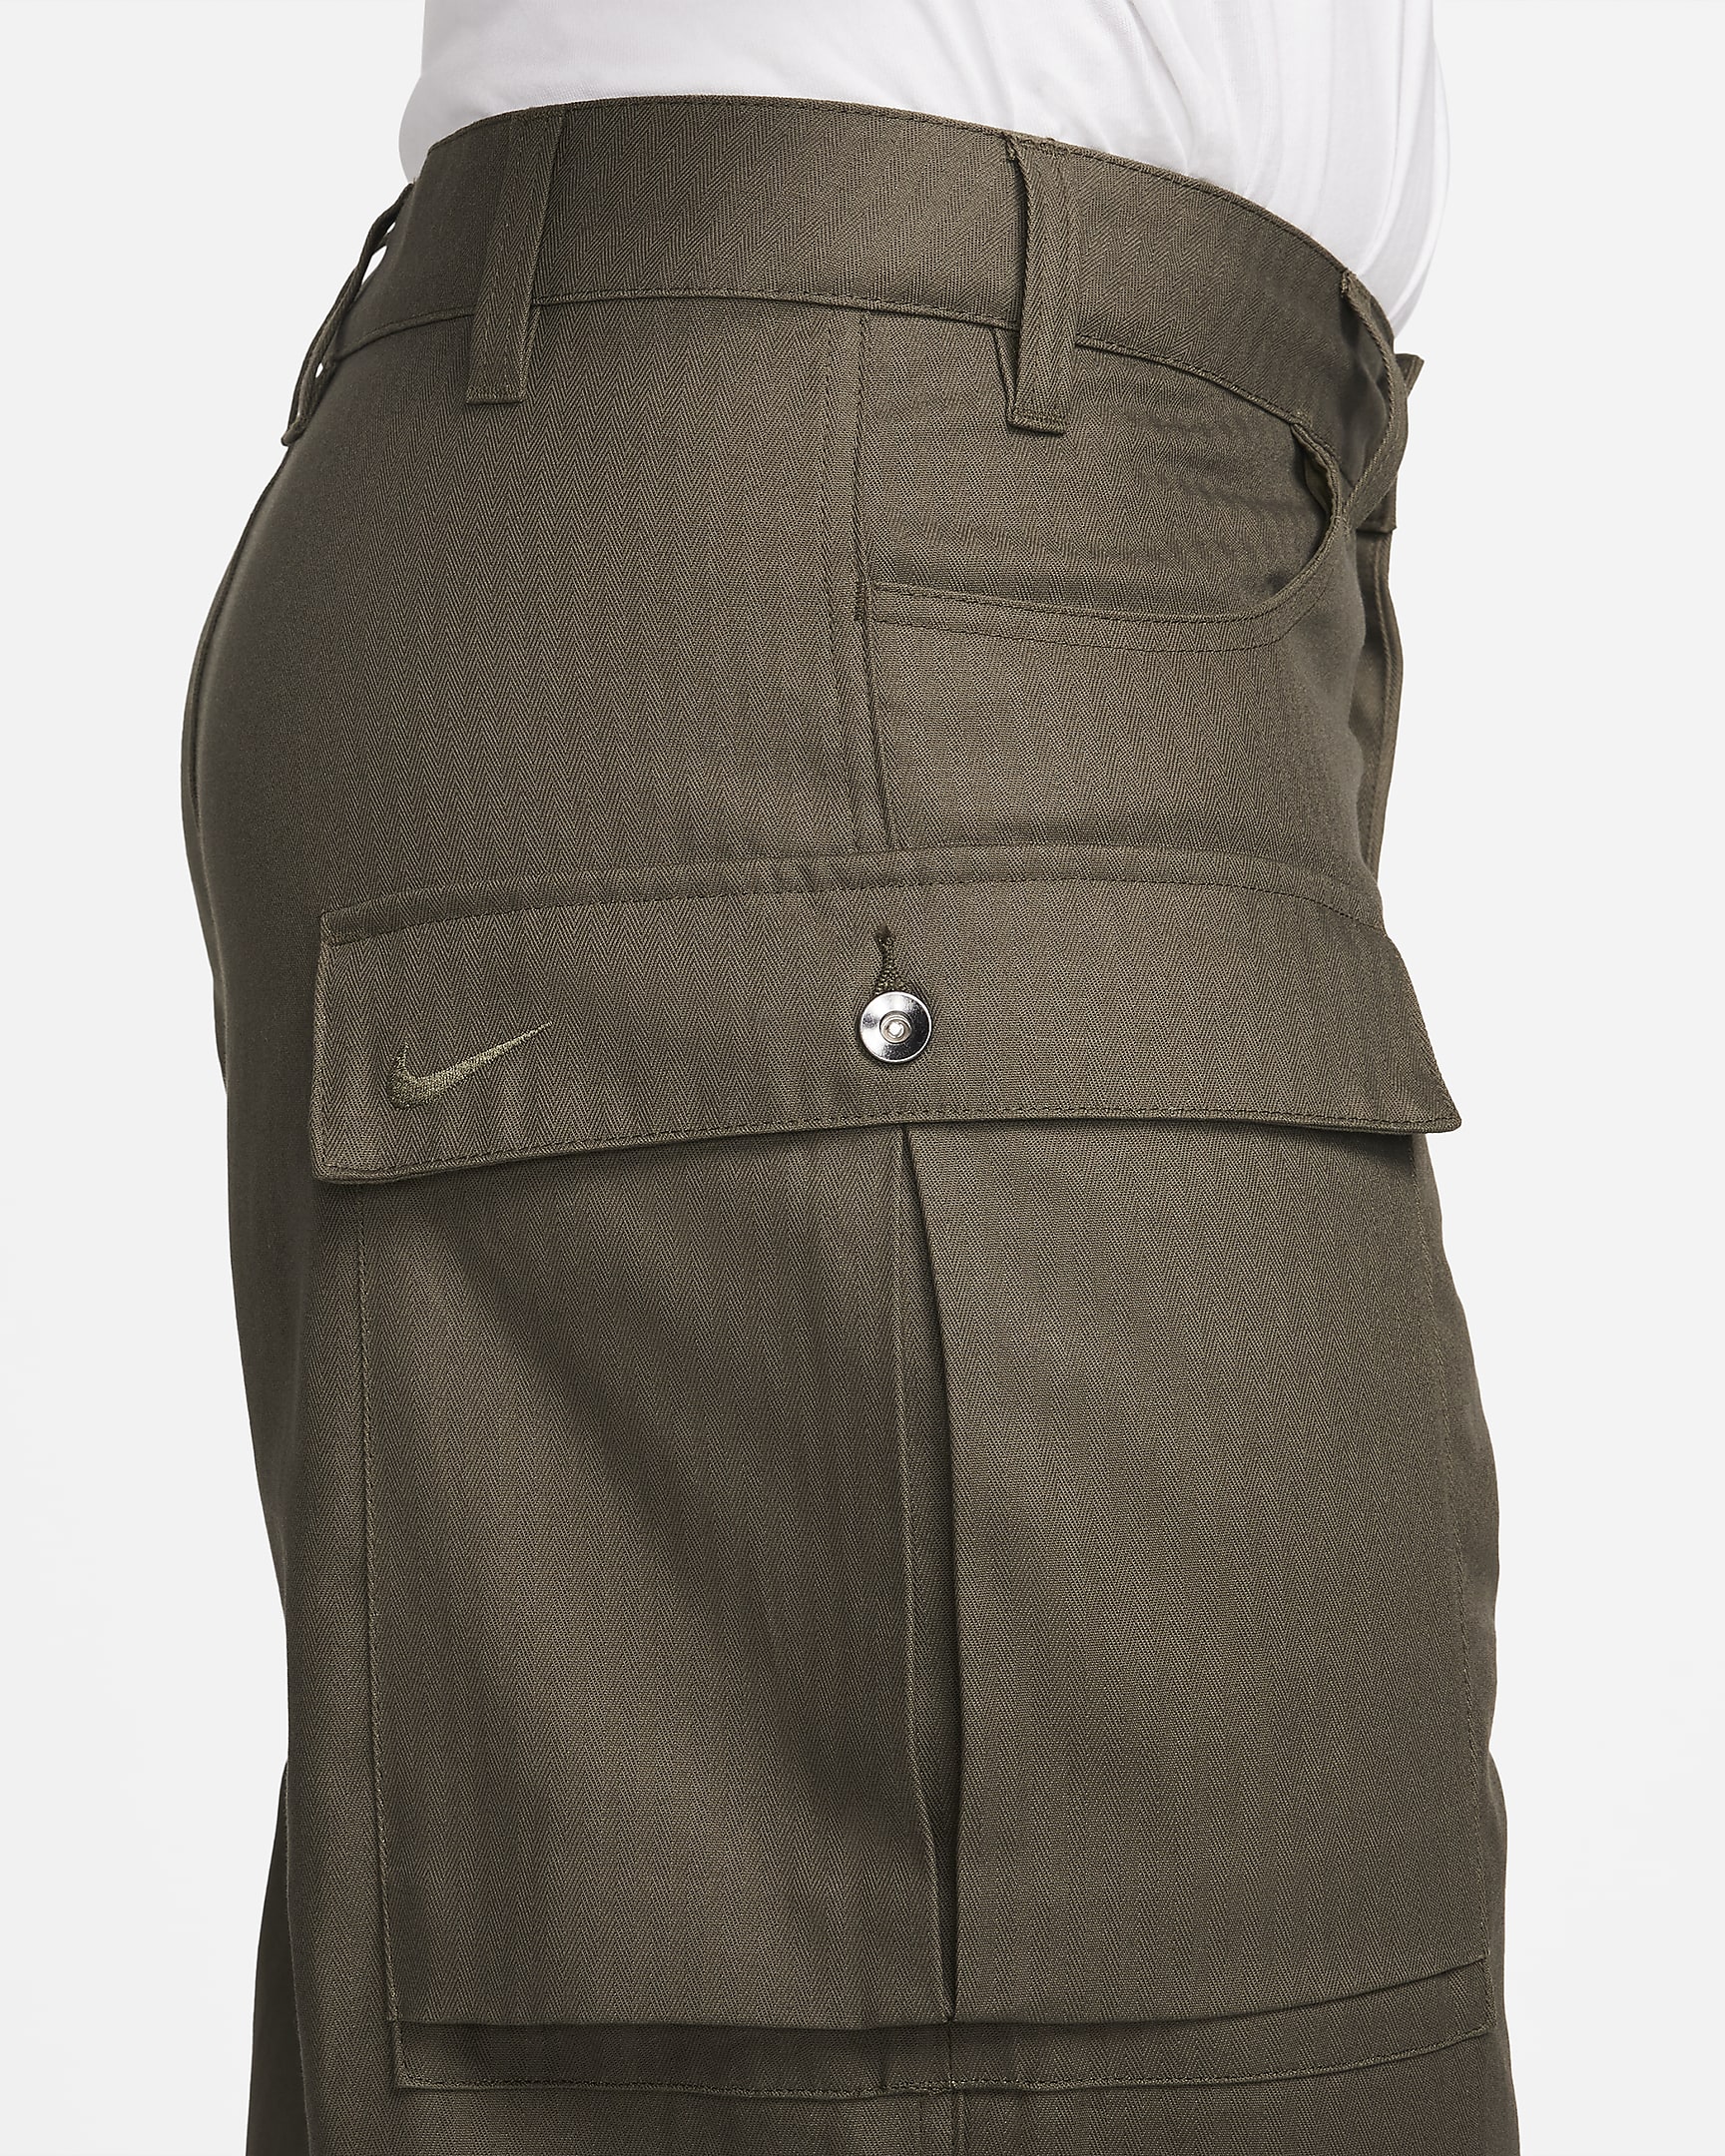 Nike Life Men's Cargo Pants. Nike.com